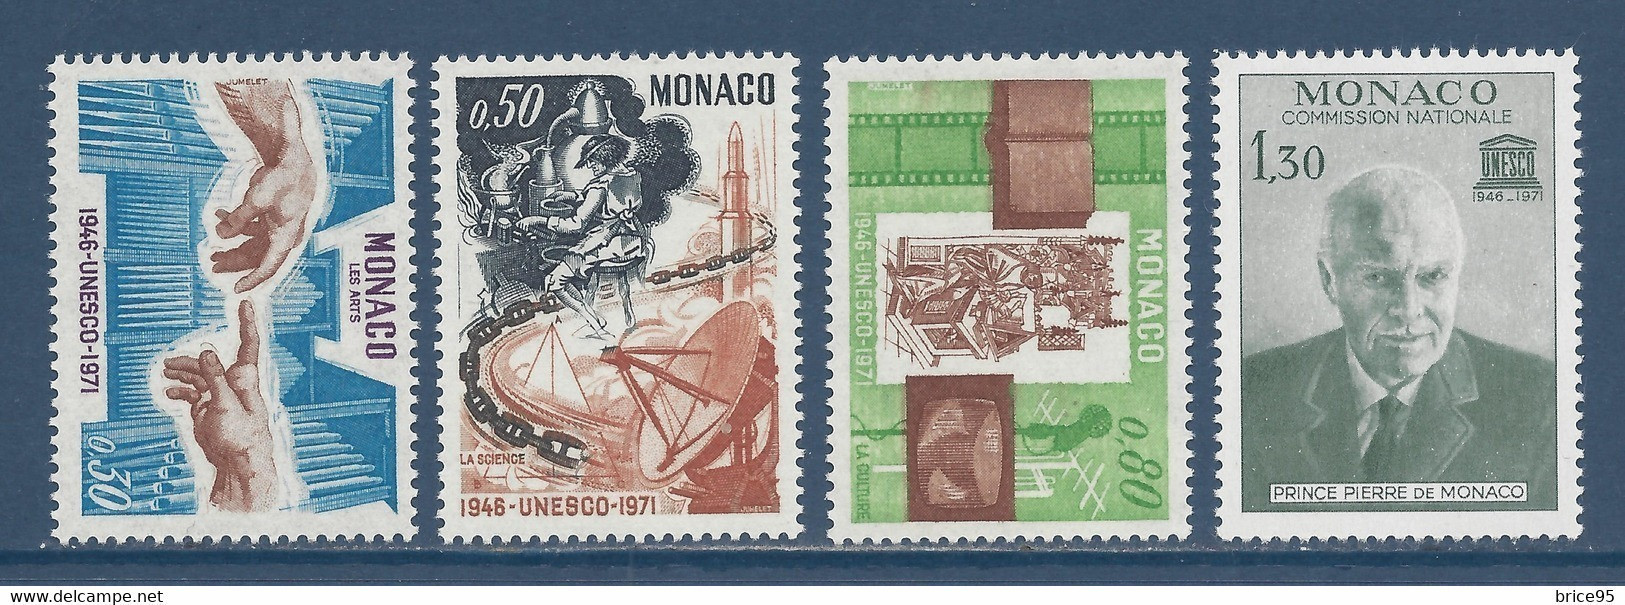 Monaco - YT N° 855 à 858 ** - Neuf Sans Charnière - 1971 - Neufs